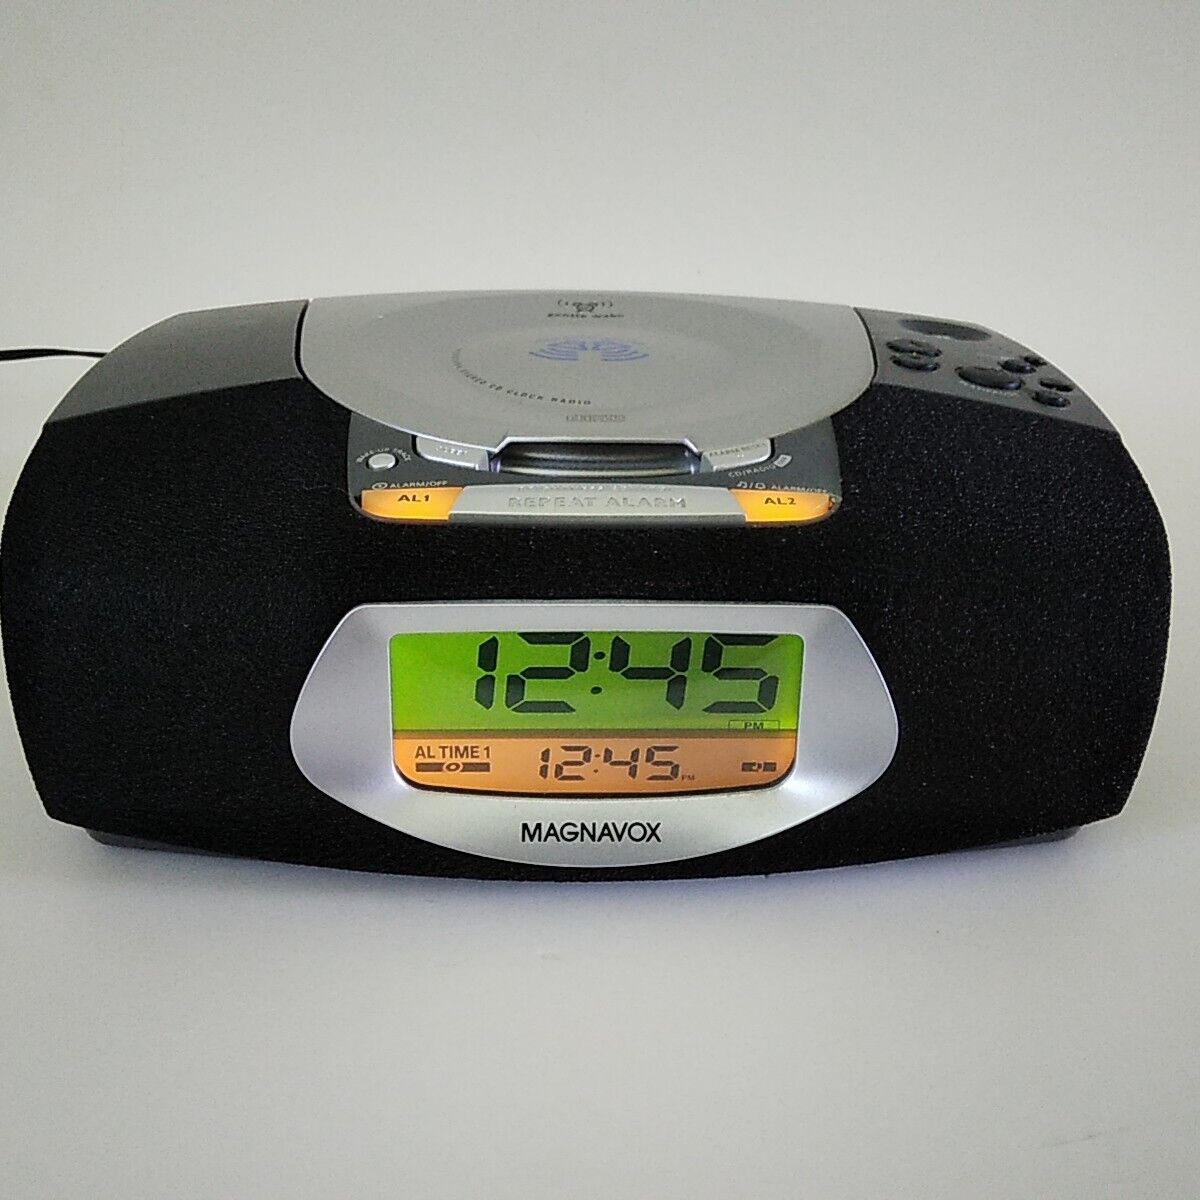 Magnavox MCR220BK/17 CD Player/Dual Alarm Clock-AM/FM-2002-Tested Works